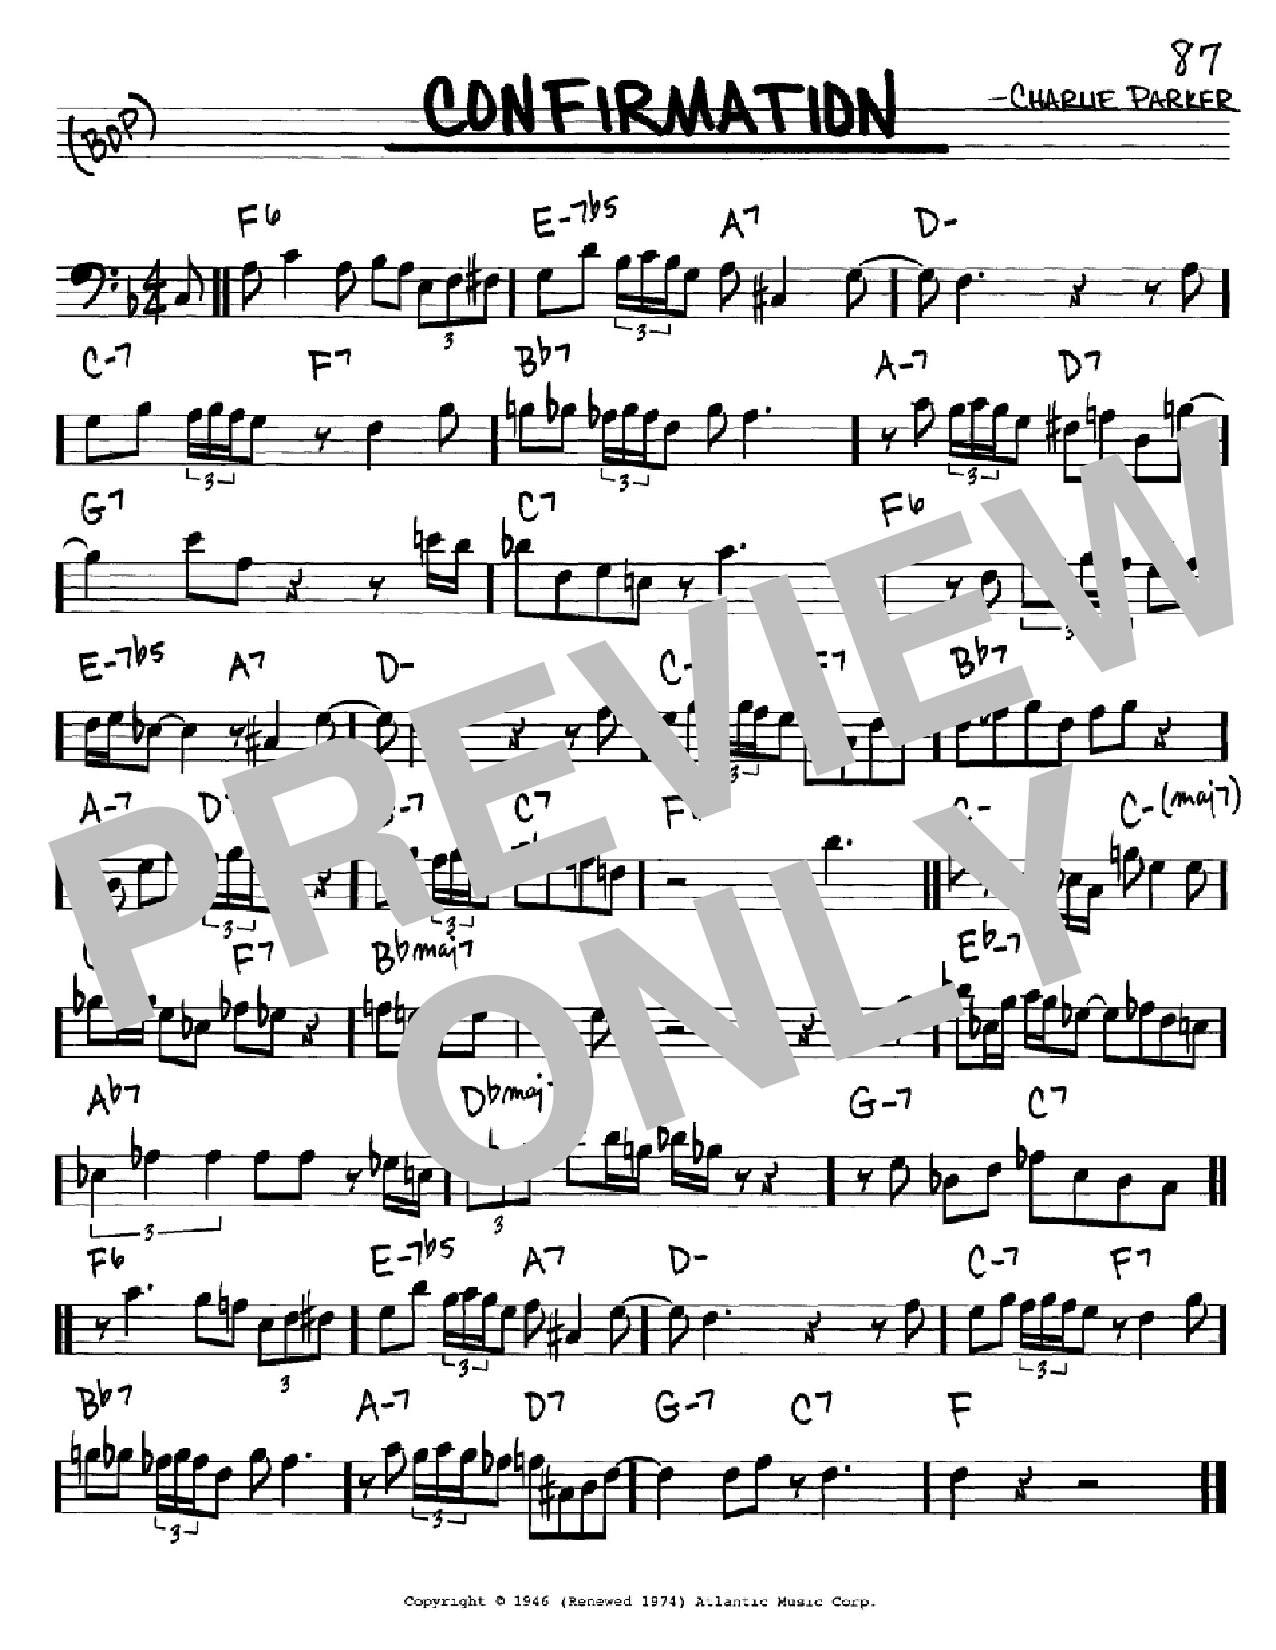 Charlie Parker Confirmation Sheet Music Notes & Chords for Transcribed Score - Download or Print PDF